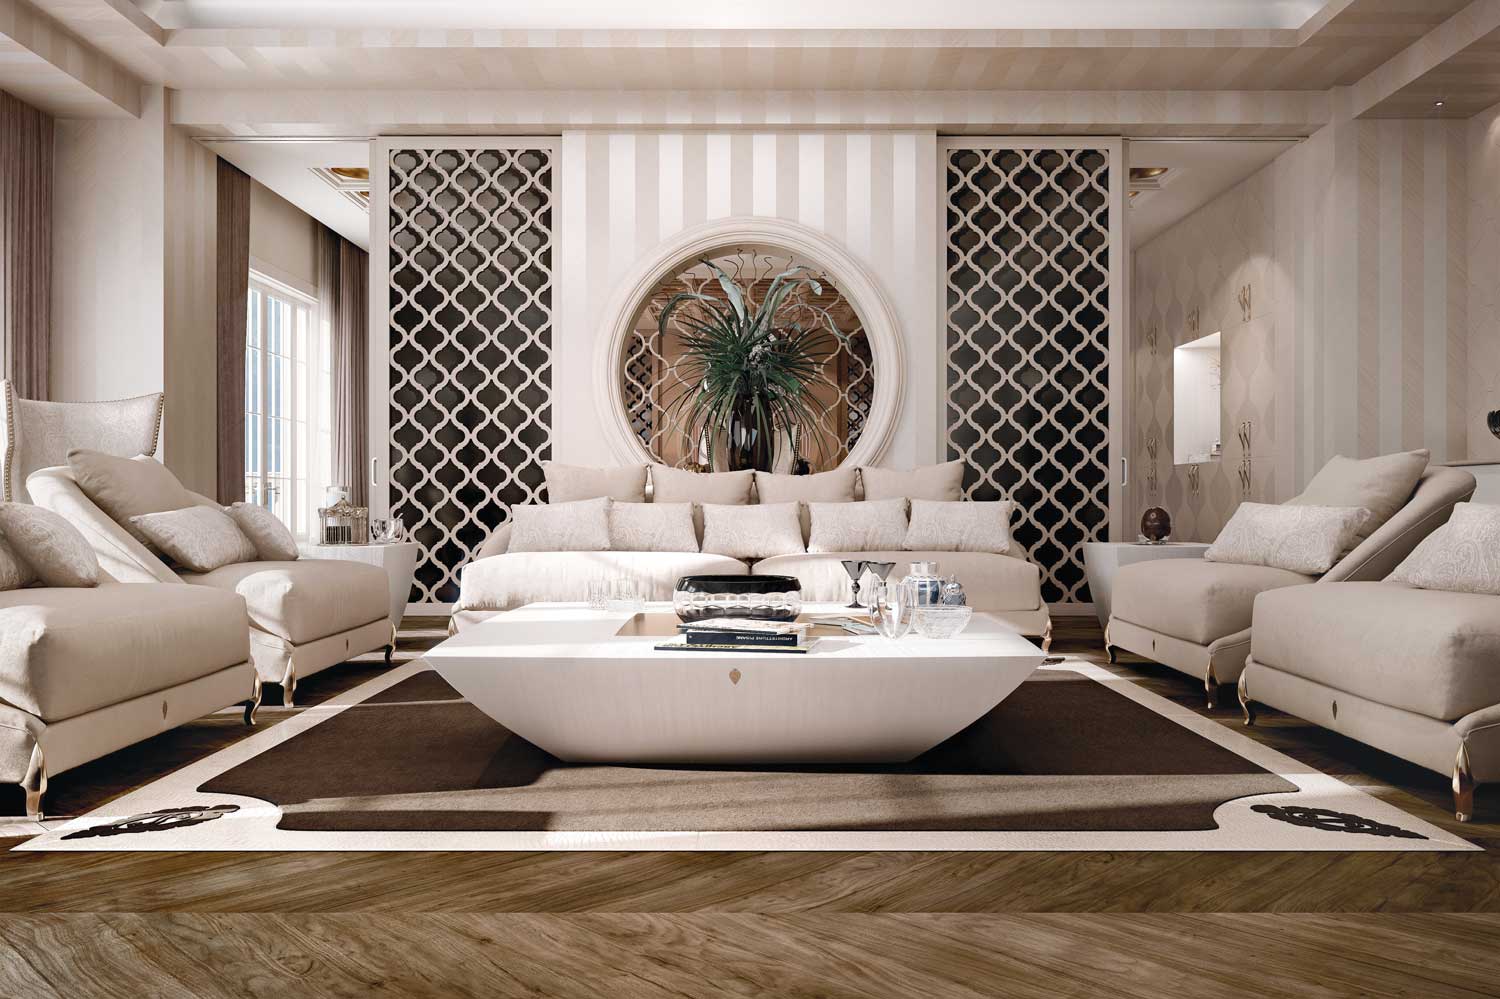 Ultra modern sitting room | Italian furniture living space | Utec 1921 sourcing advisors